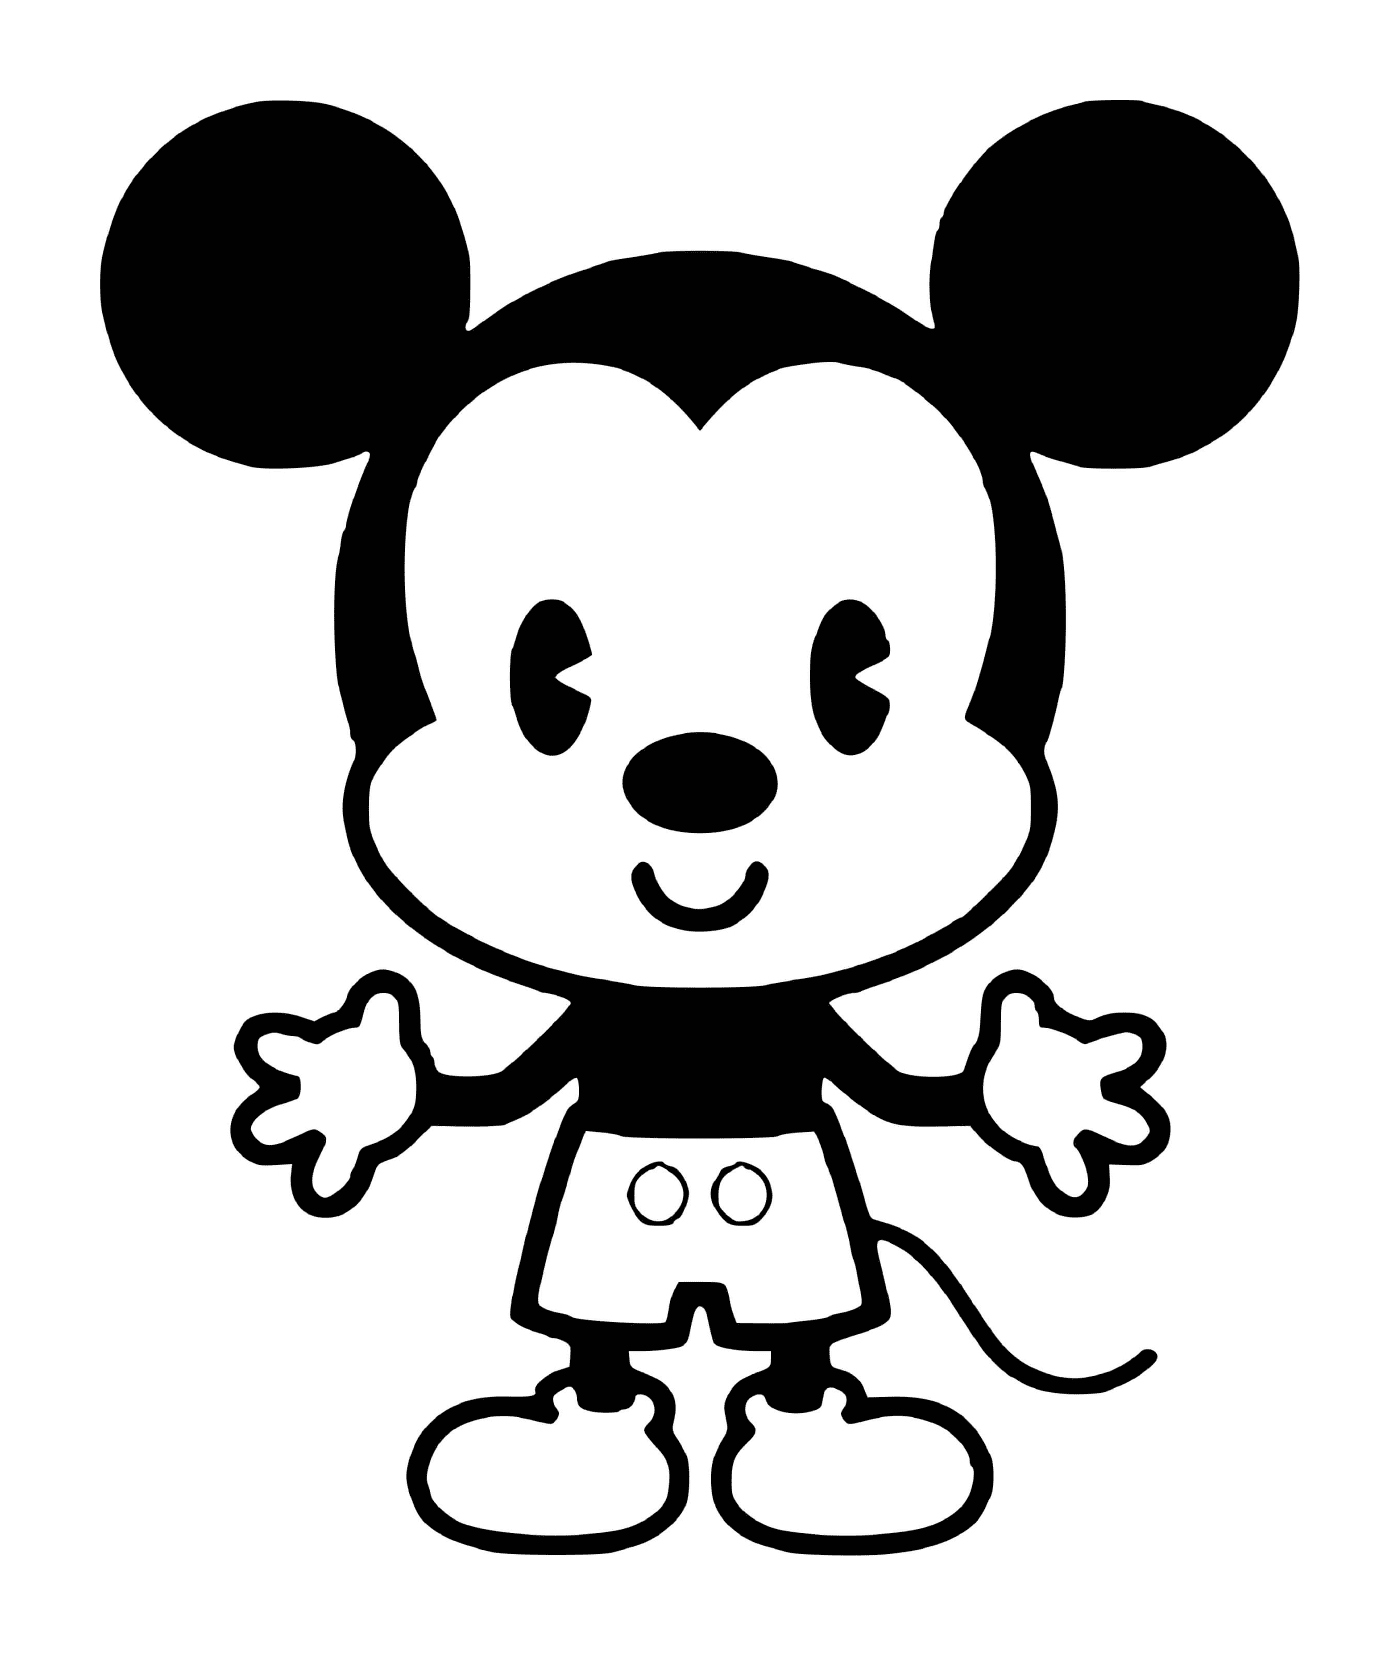  Mickey Mouse criança bebê 